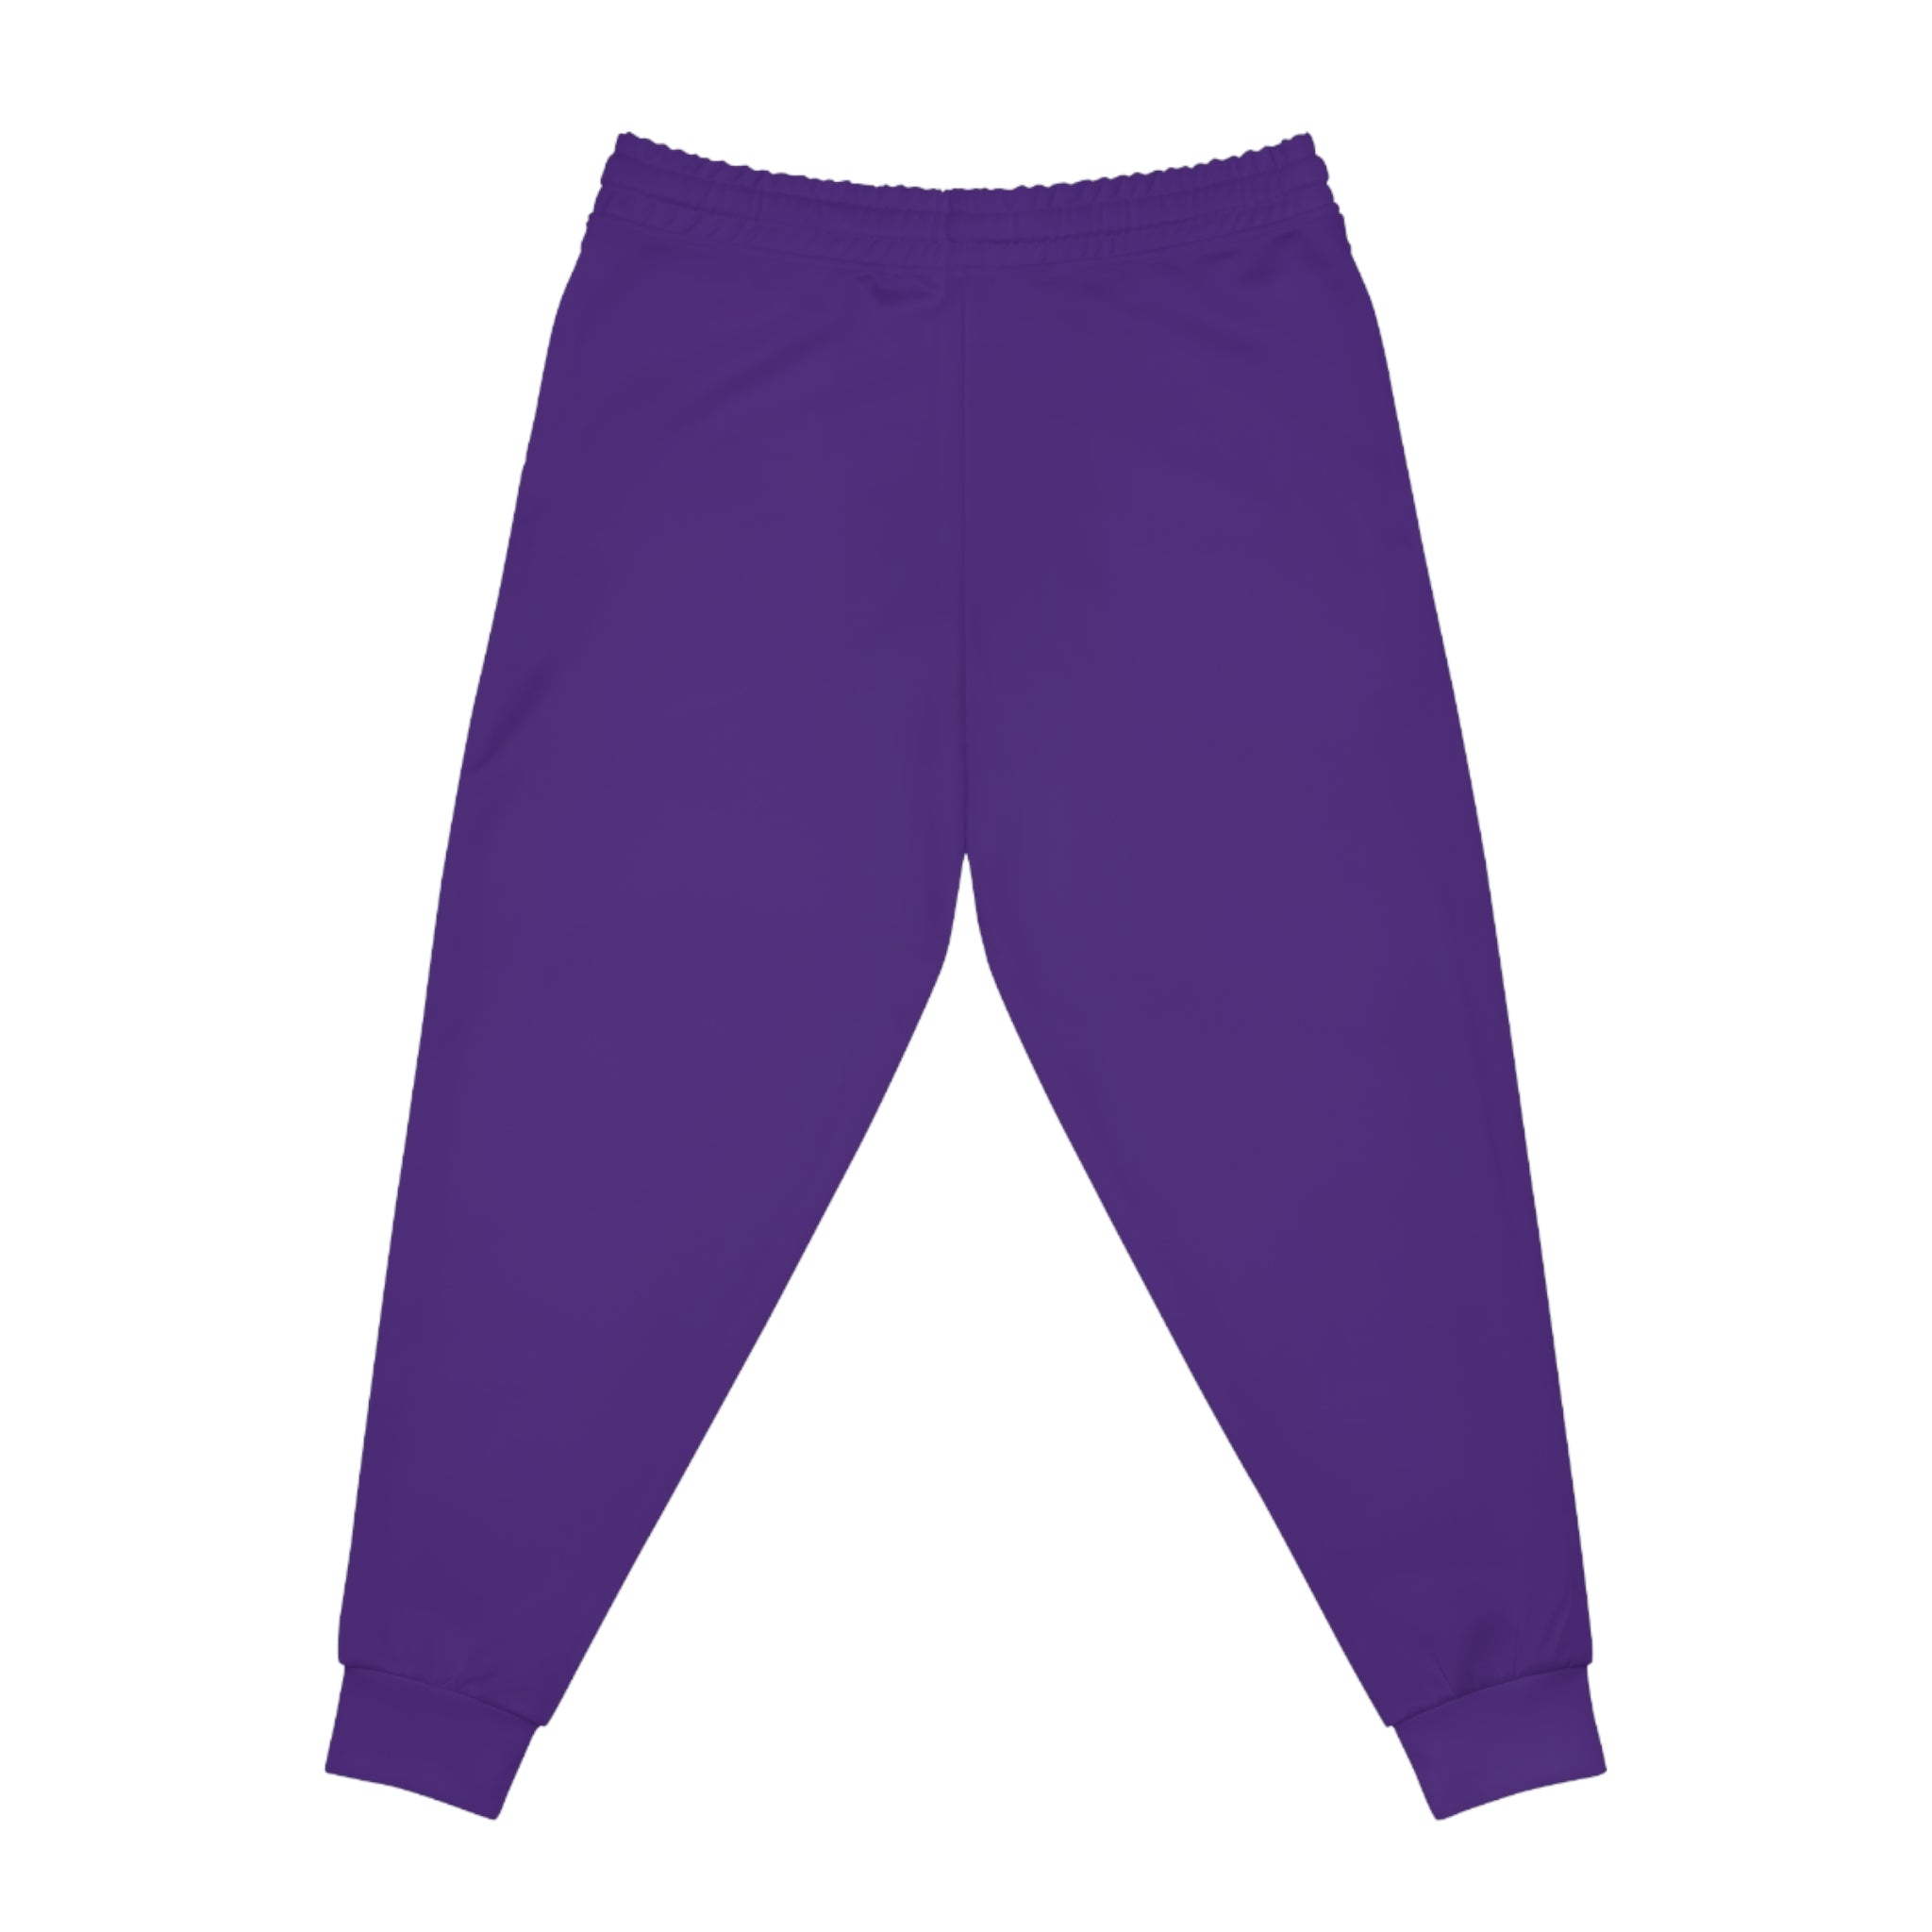 CombinedMinds Athletic Joggers Purple/White Logo